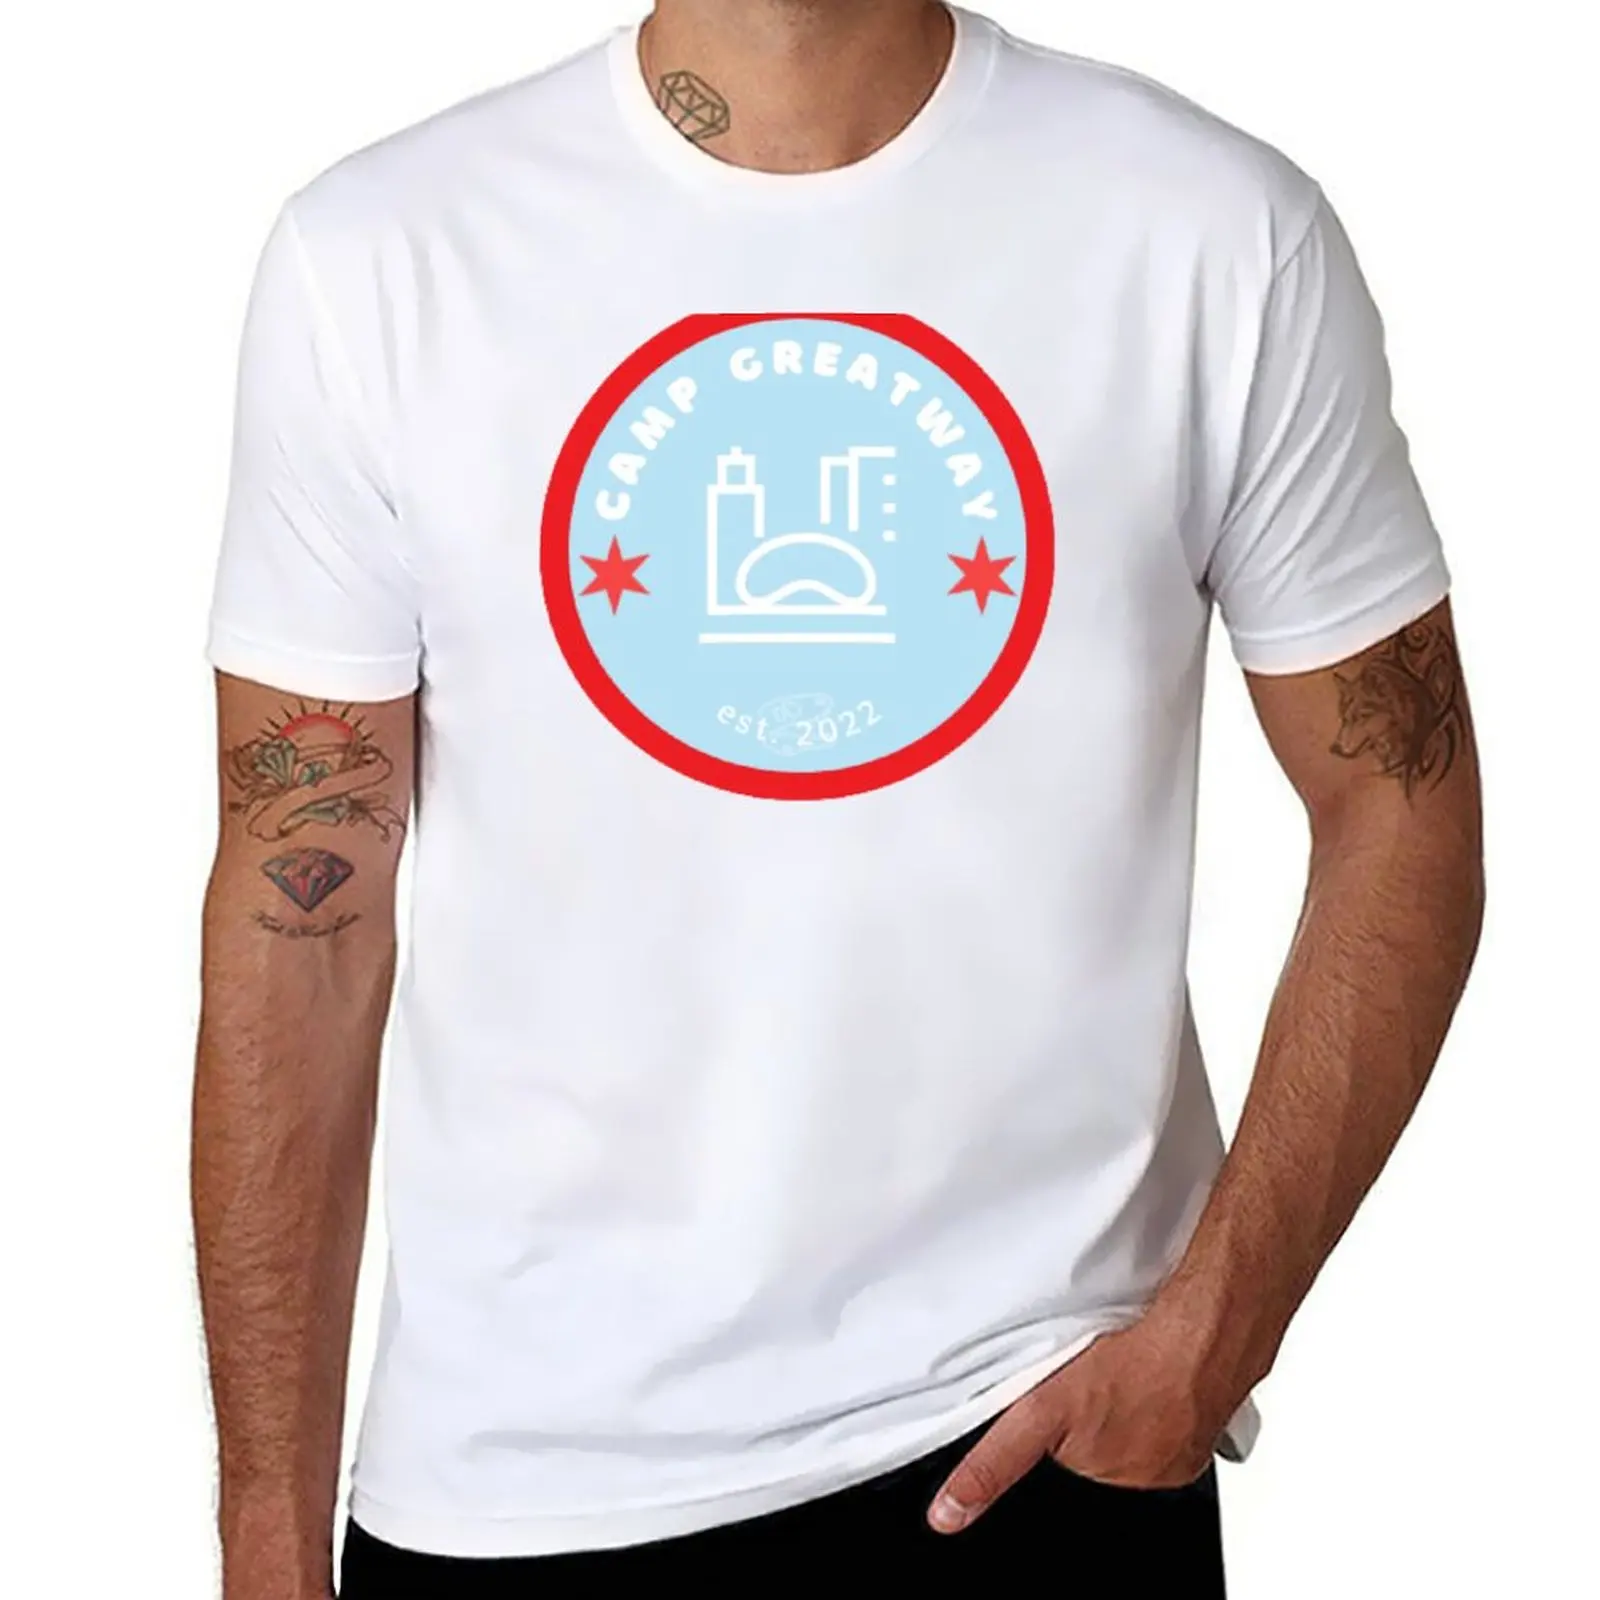 

CAMP GREATWAY T-Shirt sports fans new edition kawaii clothes plain white t shirts men